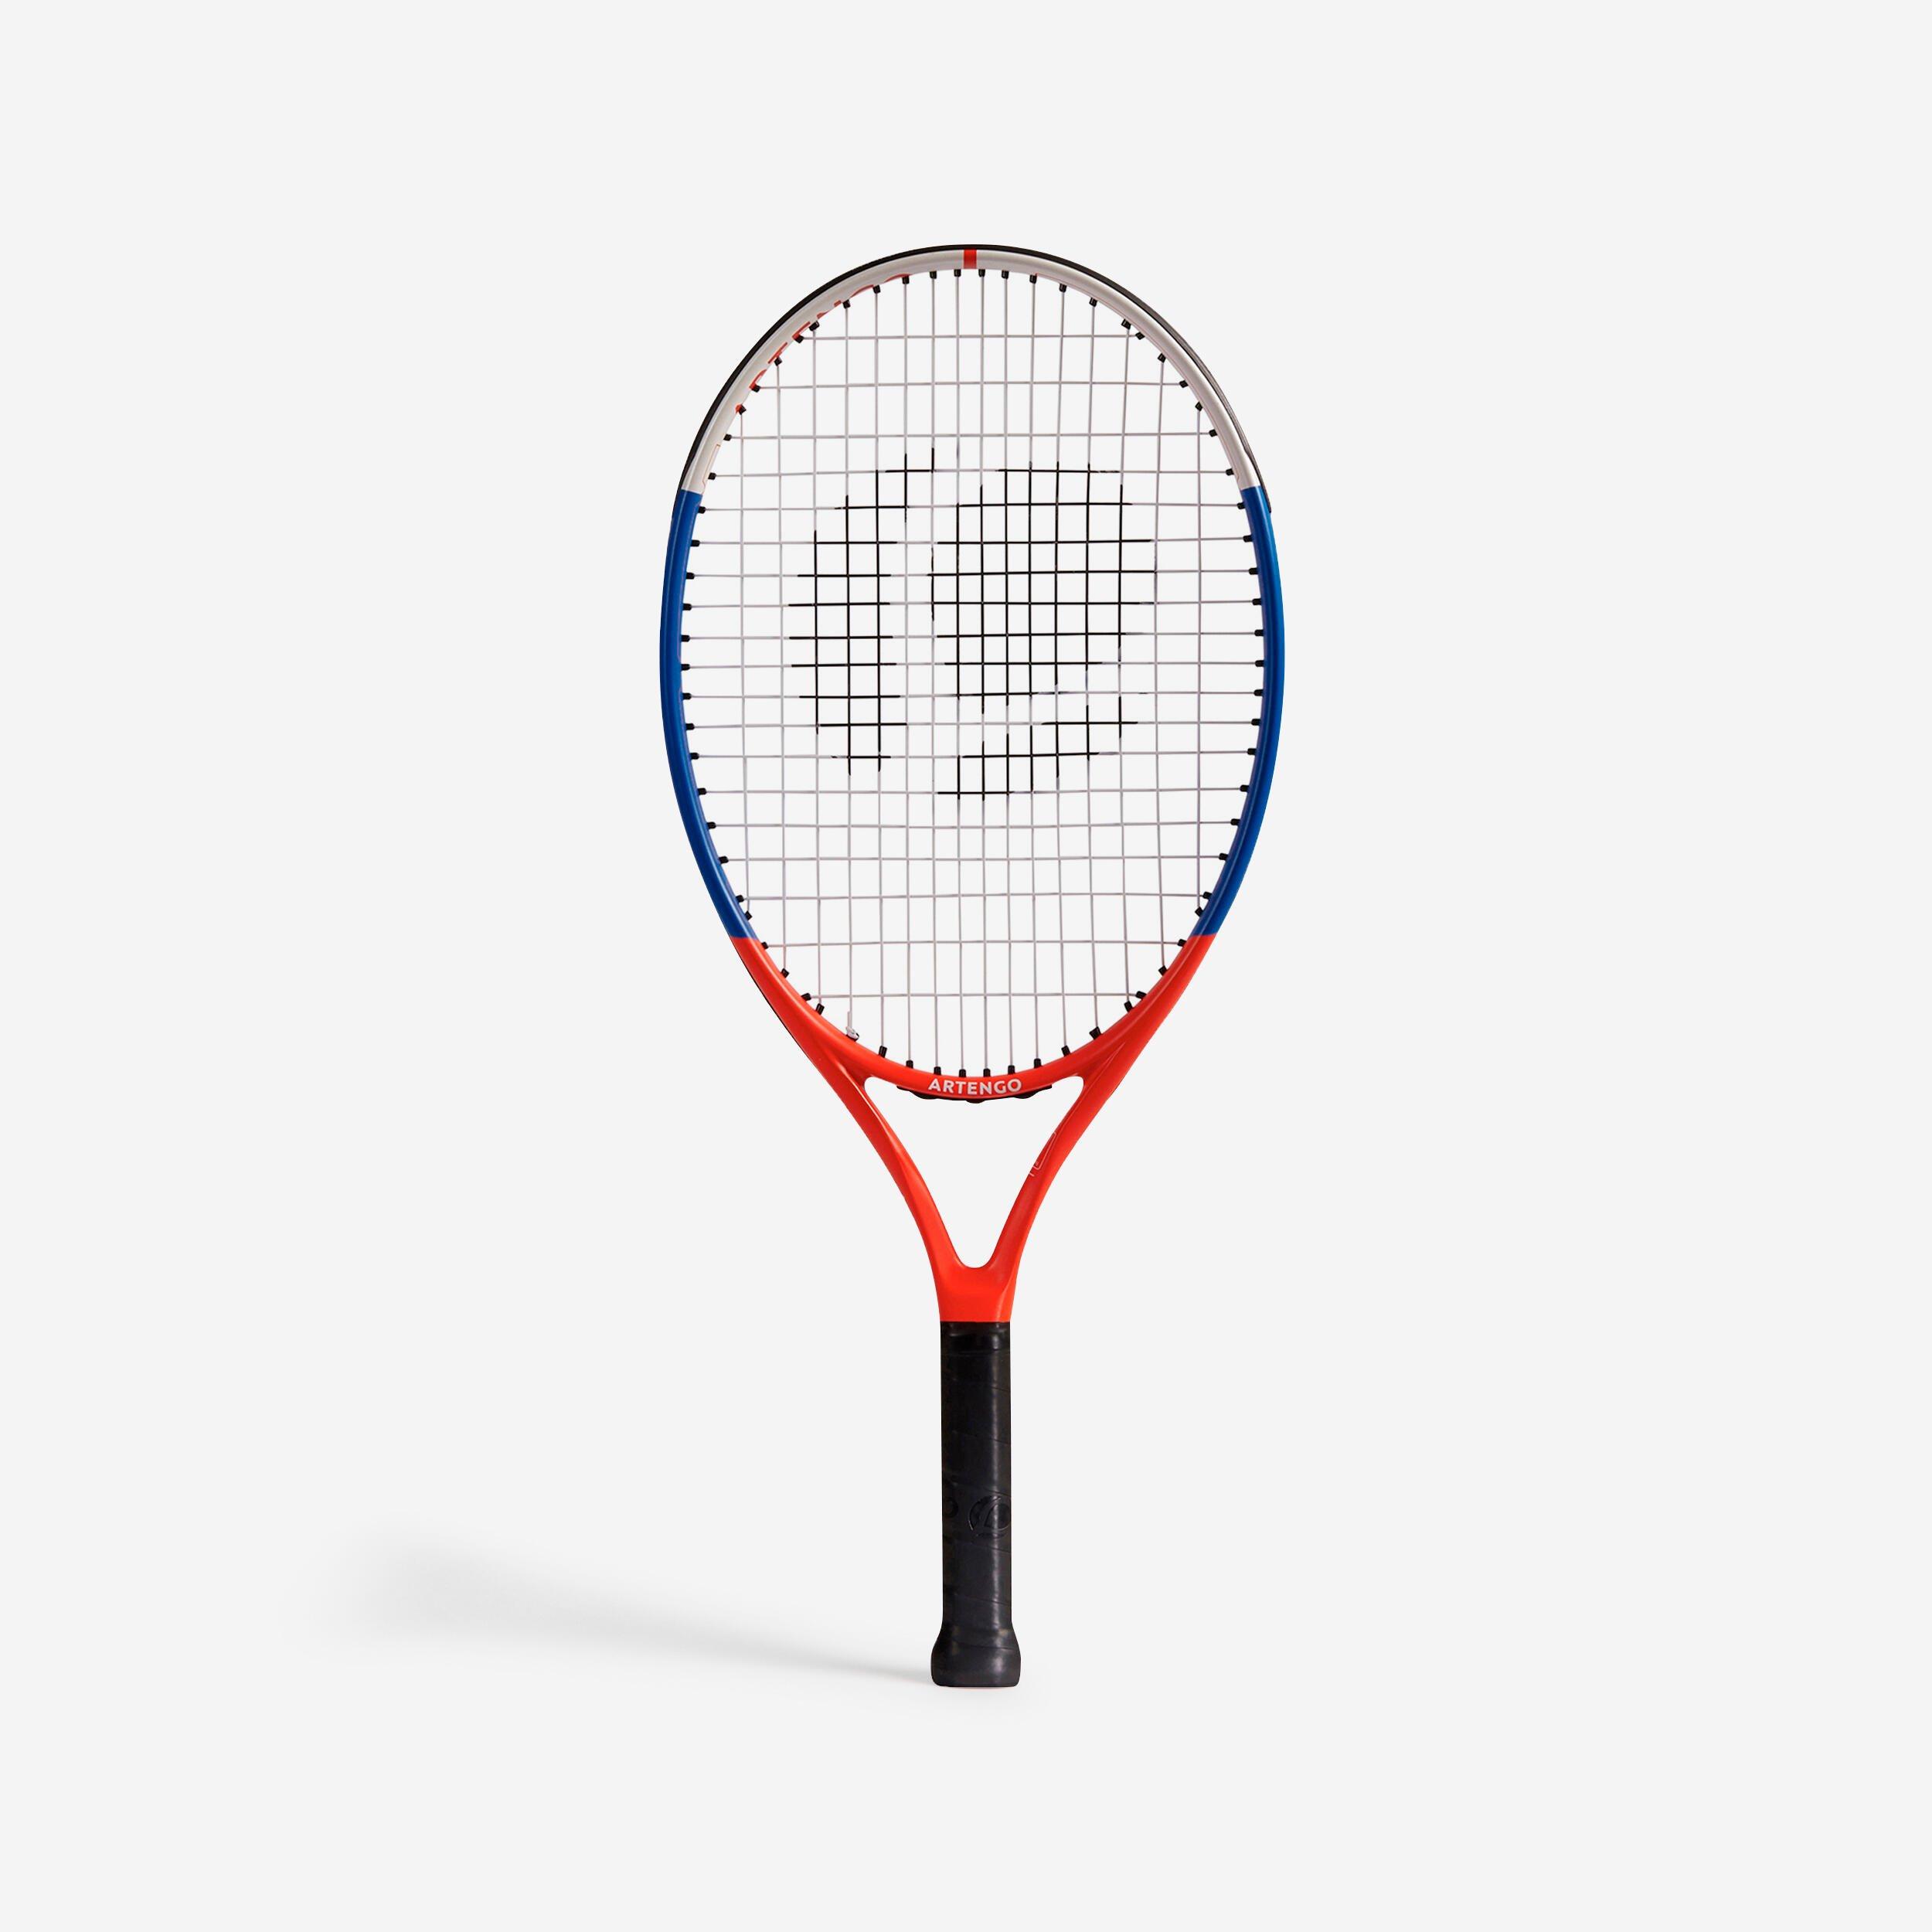 Tr530 23 Tennis Racket